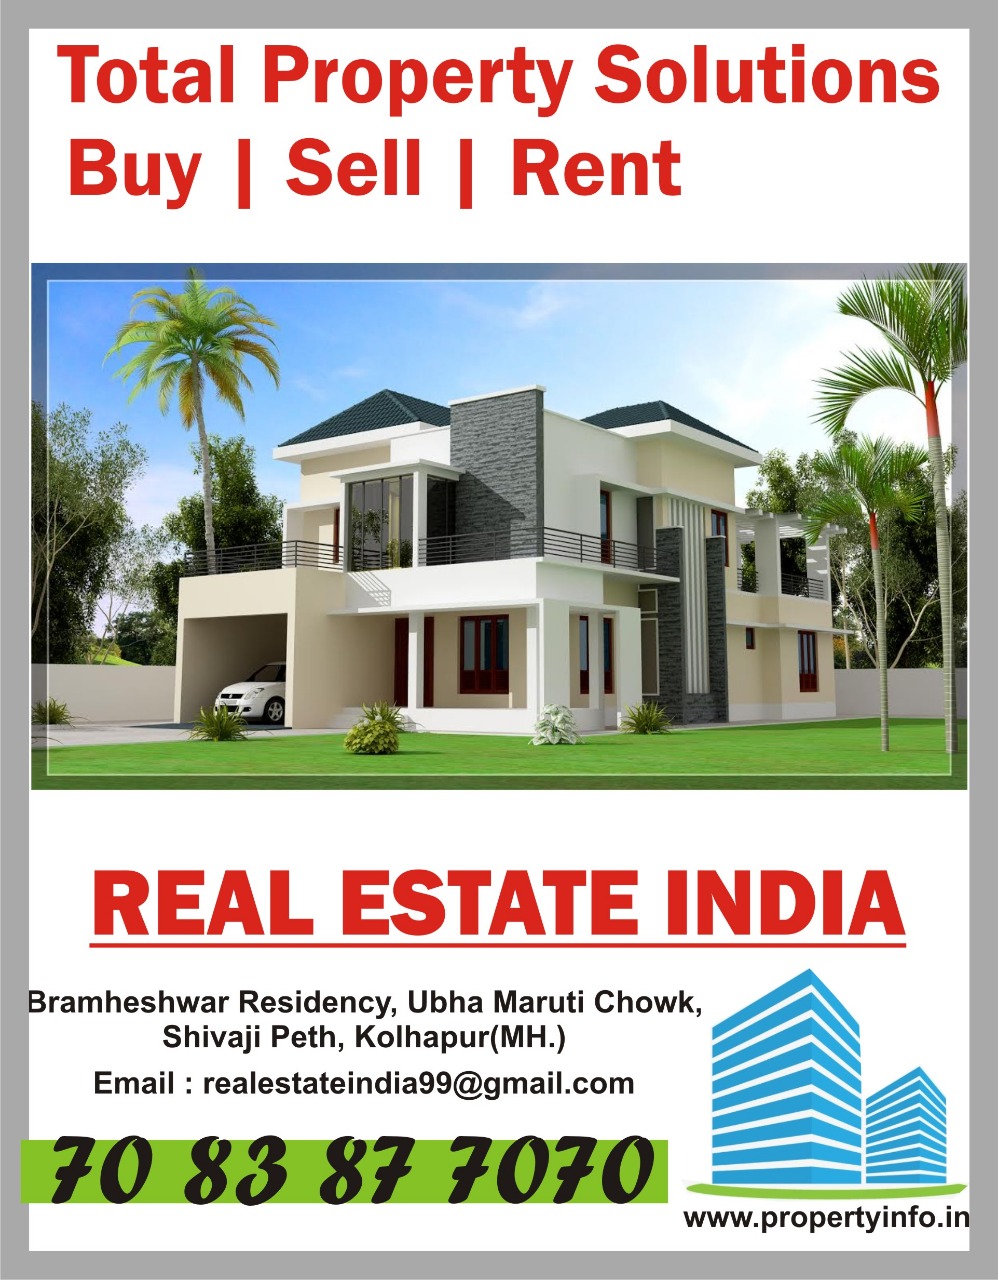 Real Estate India